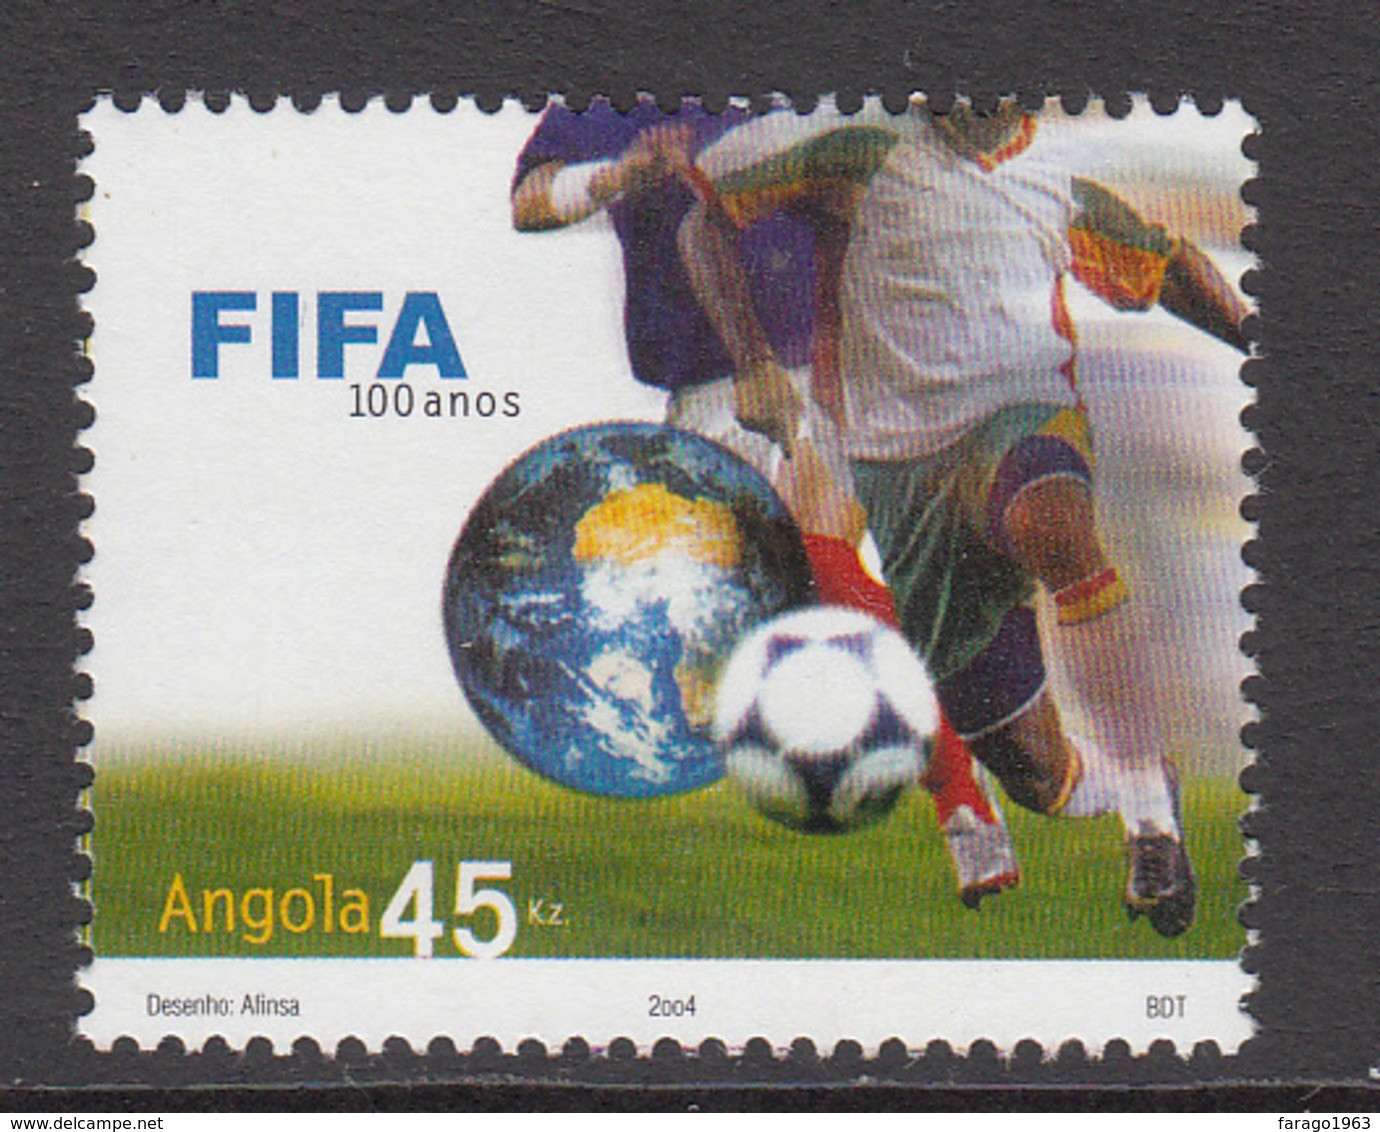 2004 Angola FIFA Football Complete Set Of 1 MNH - Angola